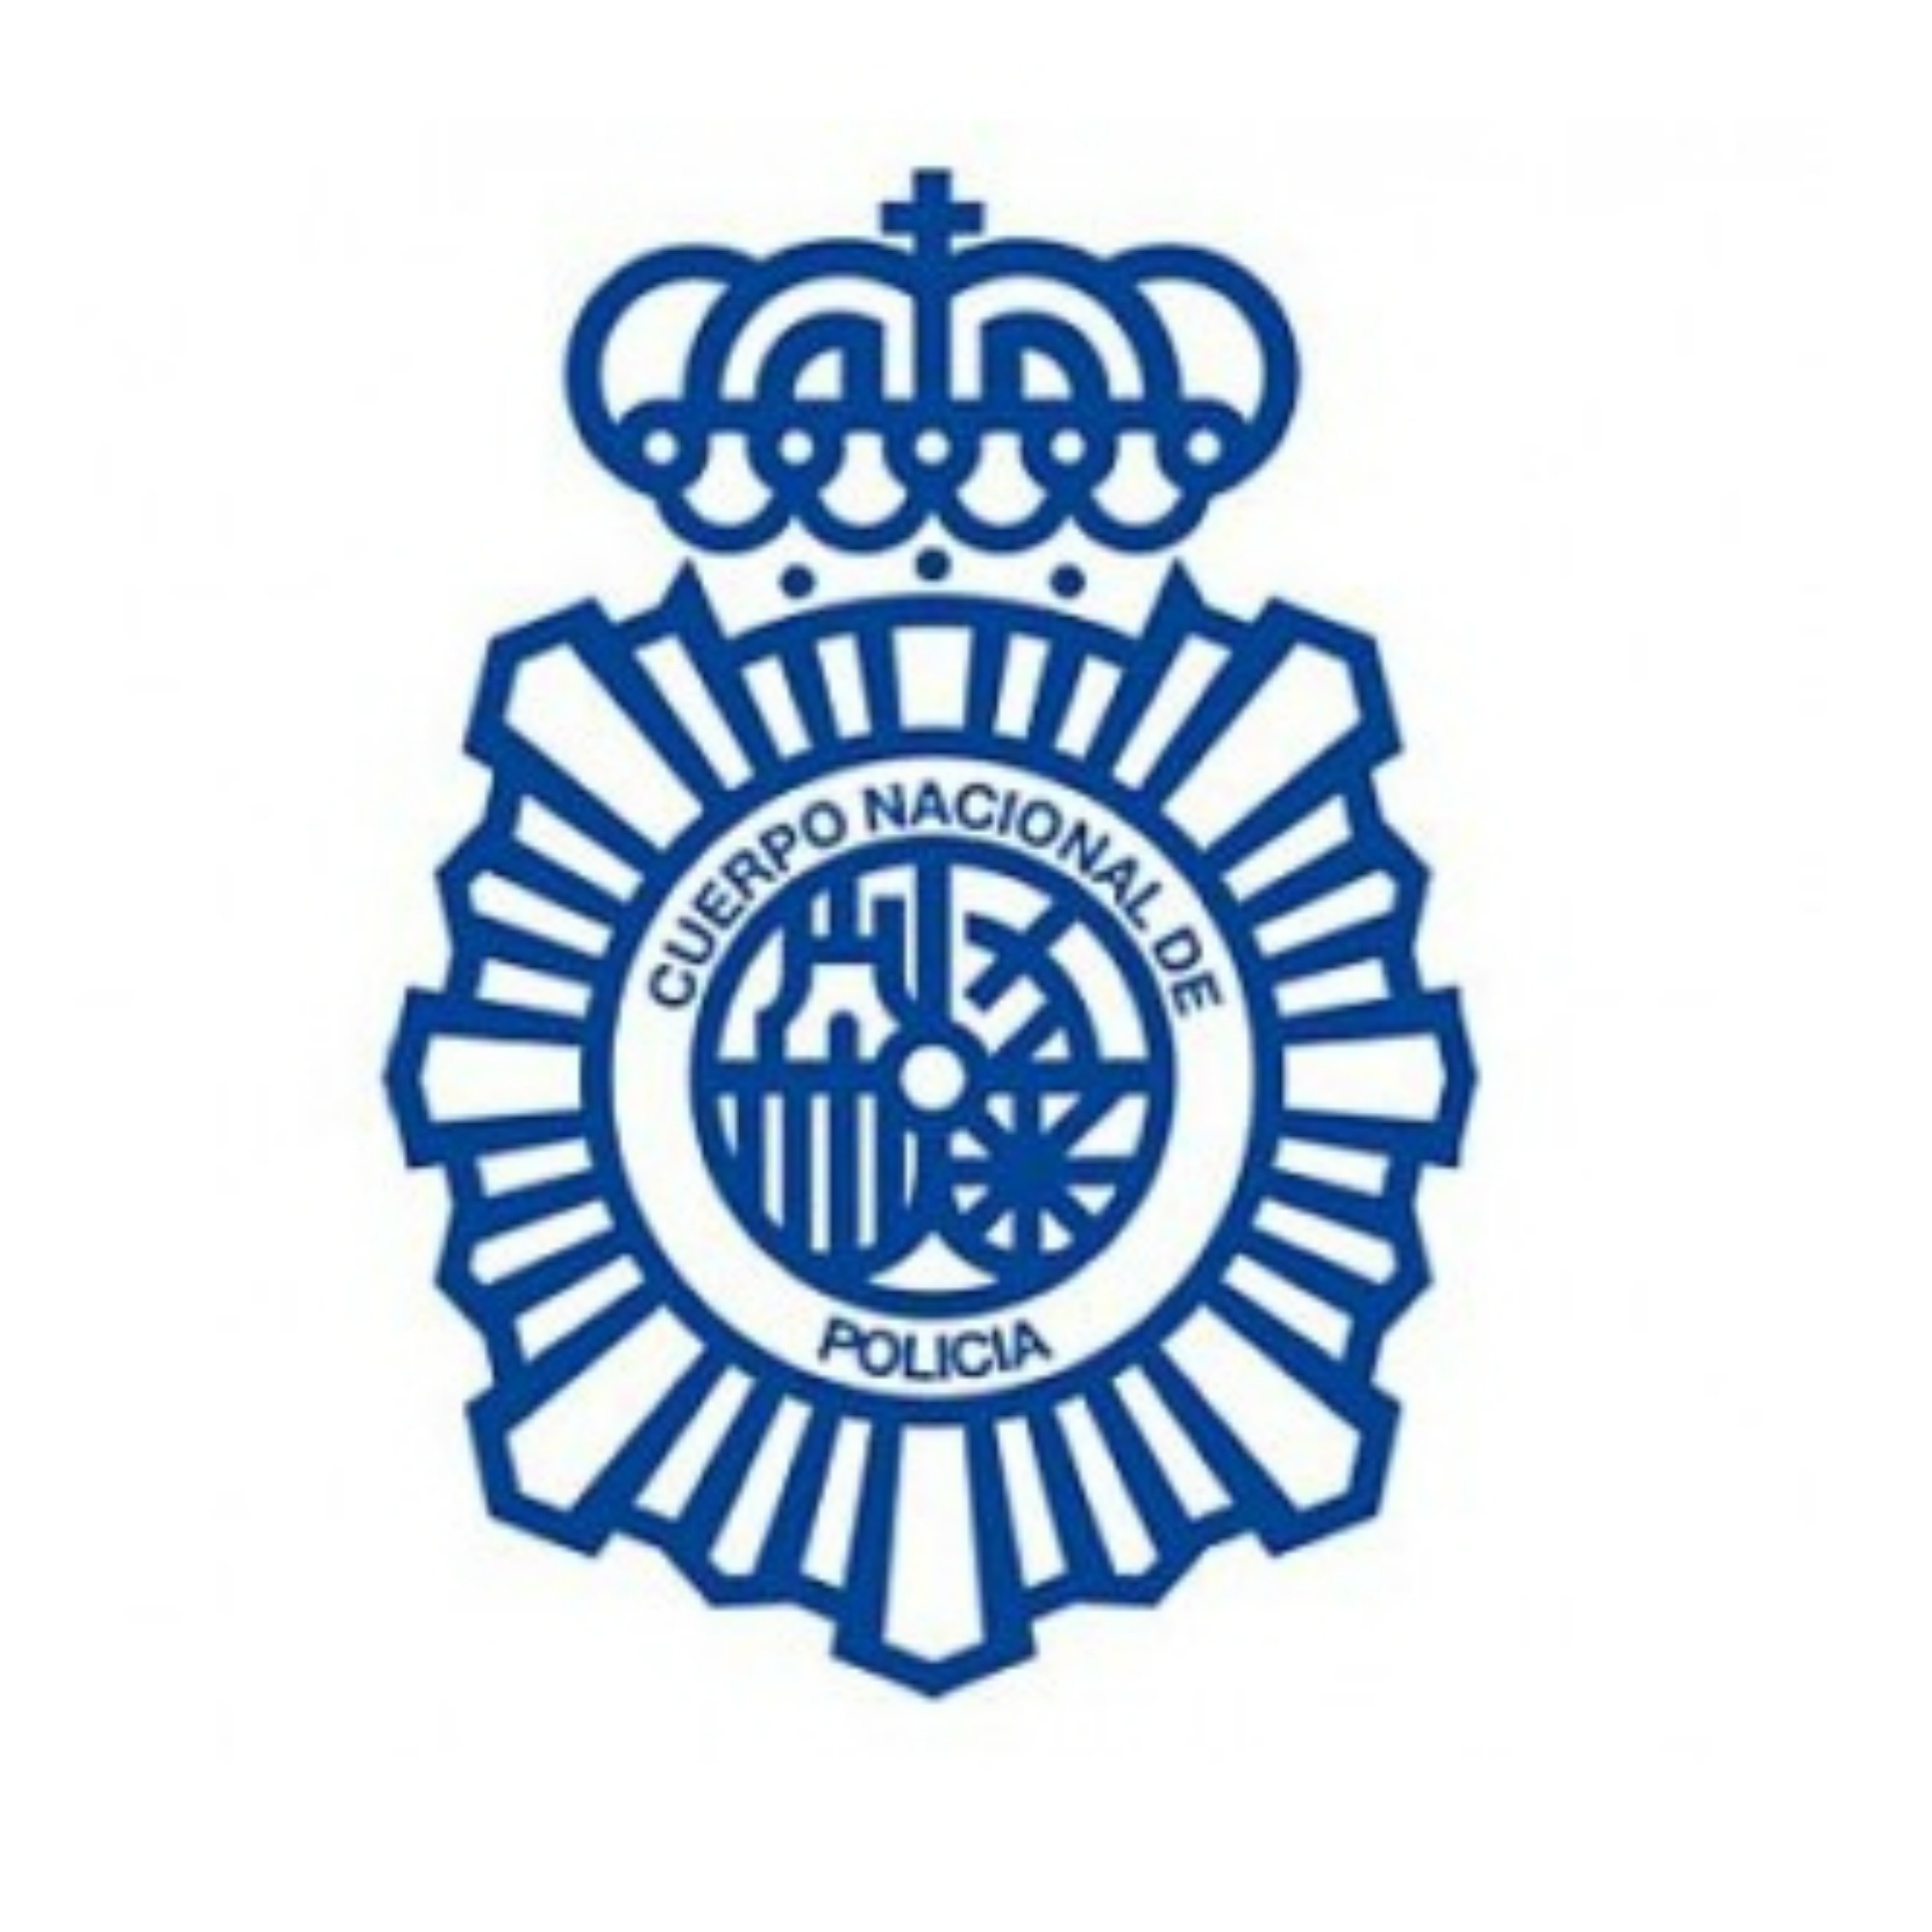 National Police emergencies